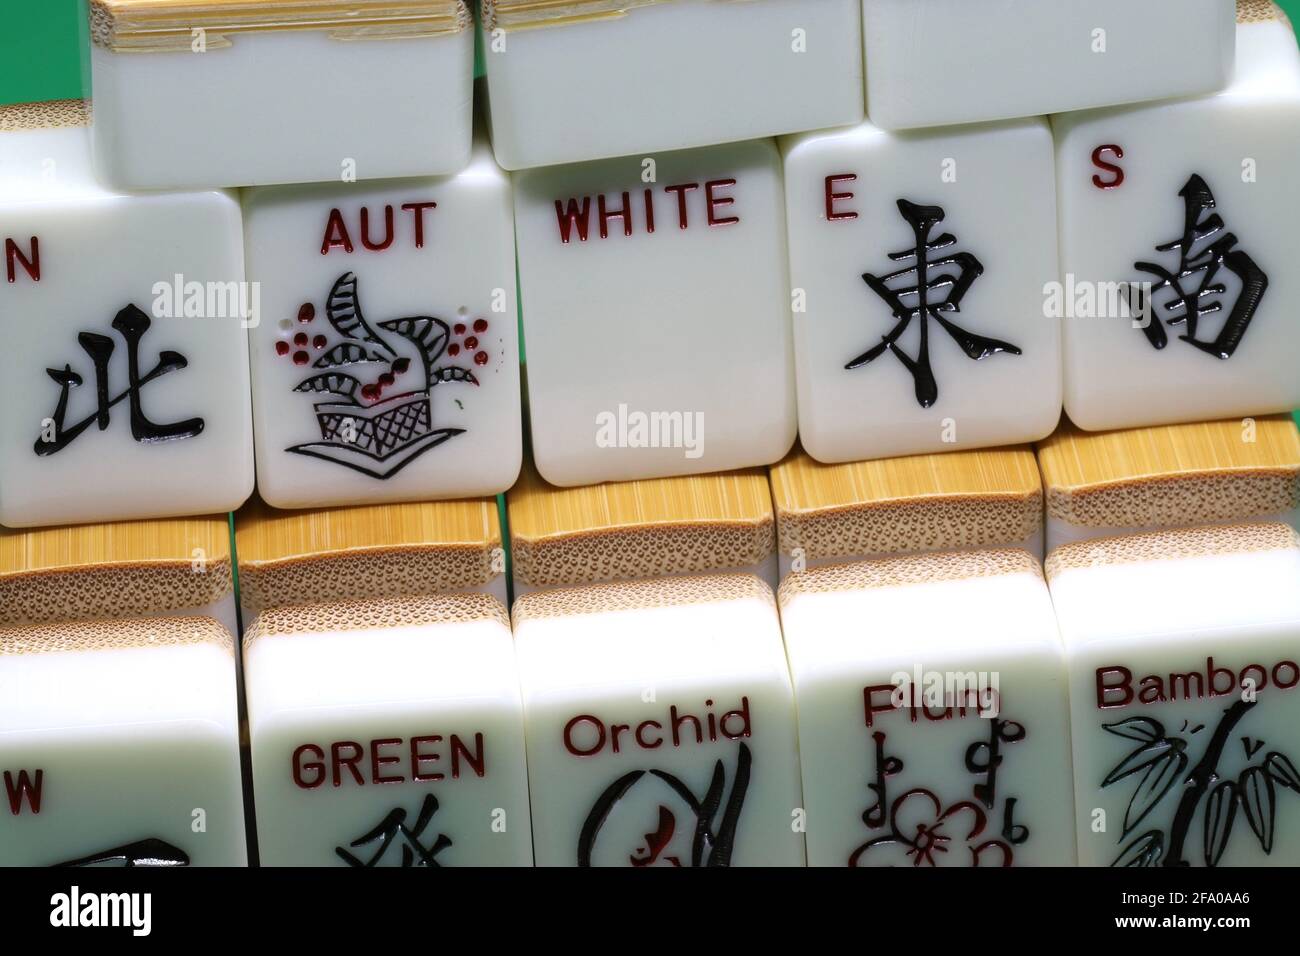 Vintage Bone and bamboo Mahjong or mah-jongg playing tiles in box.  Background Stock Photo - Alamy